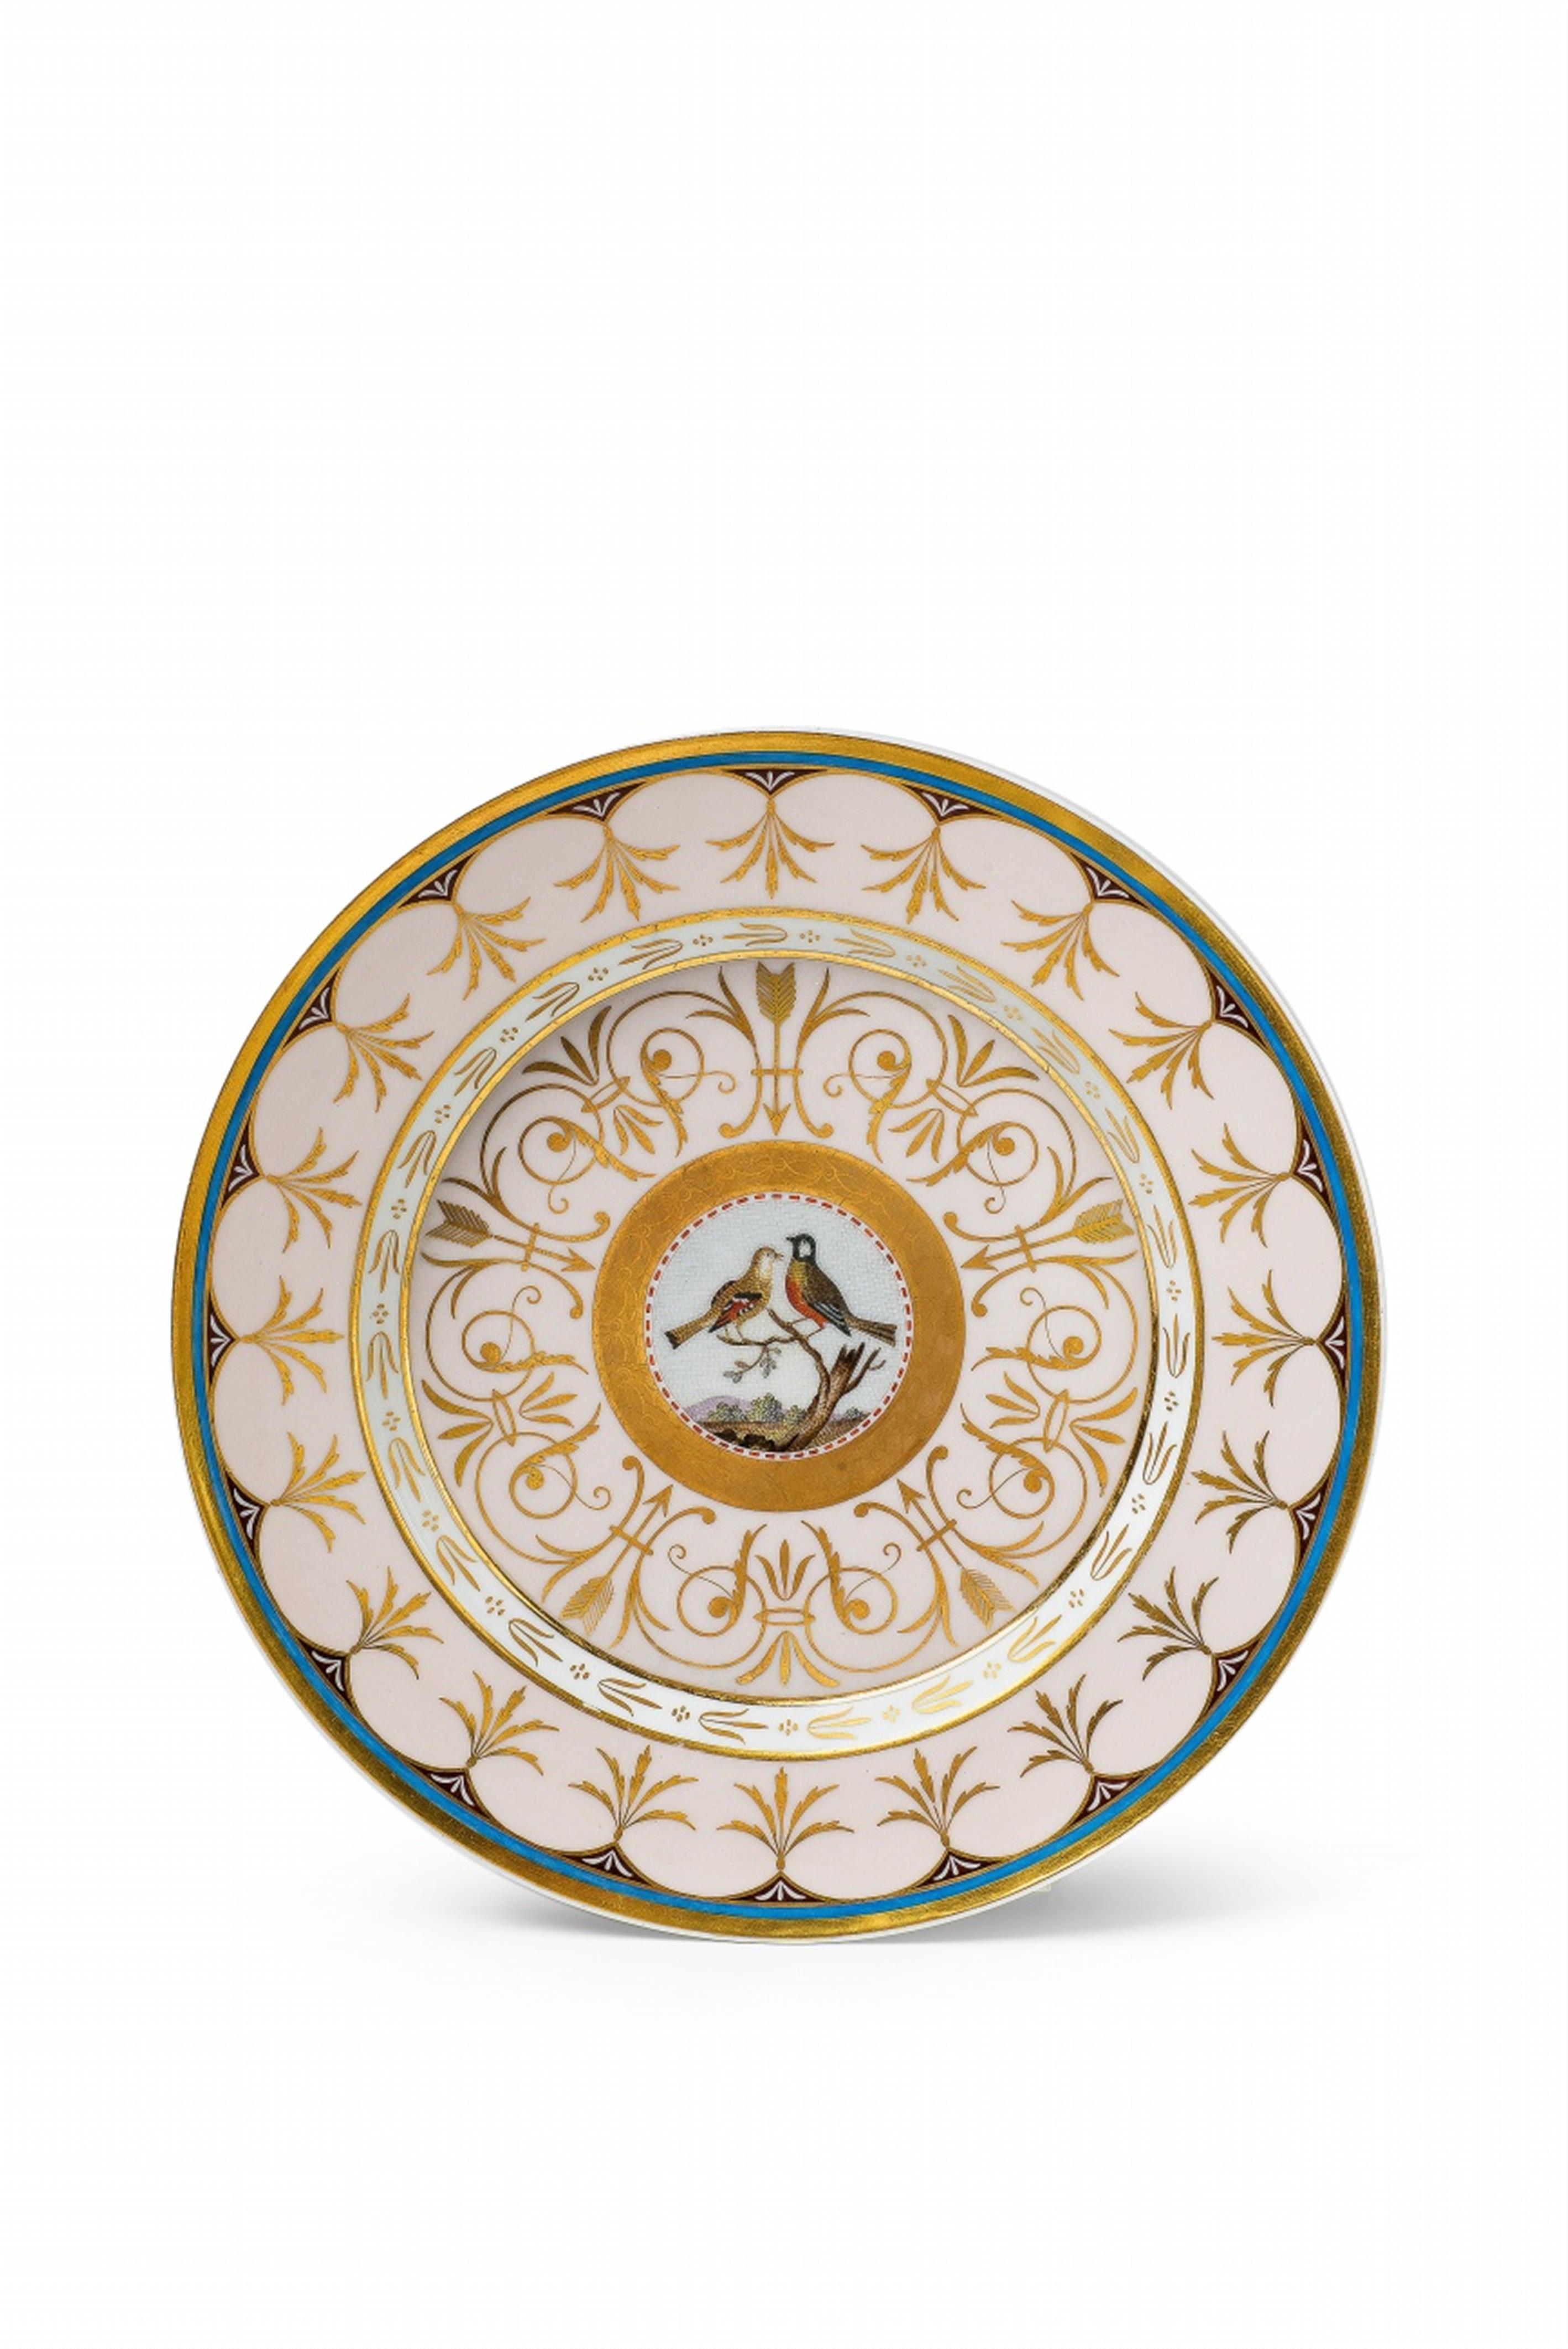 A Berlin KPM porcelain plate with micromosaic decor - image-1